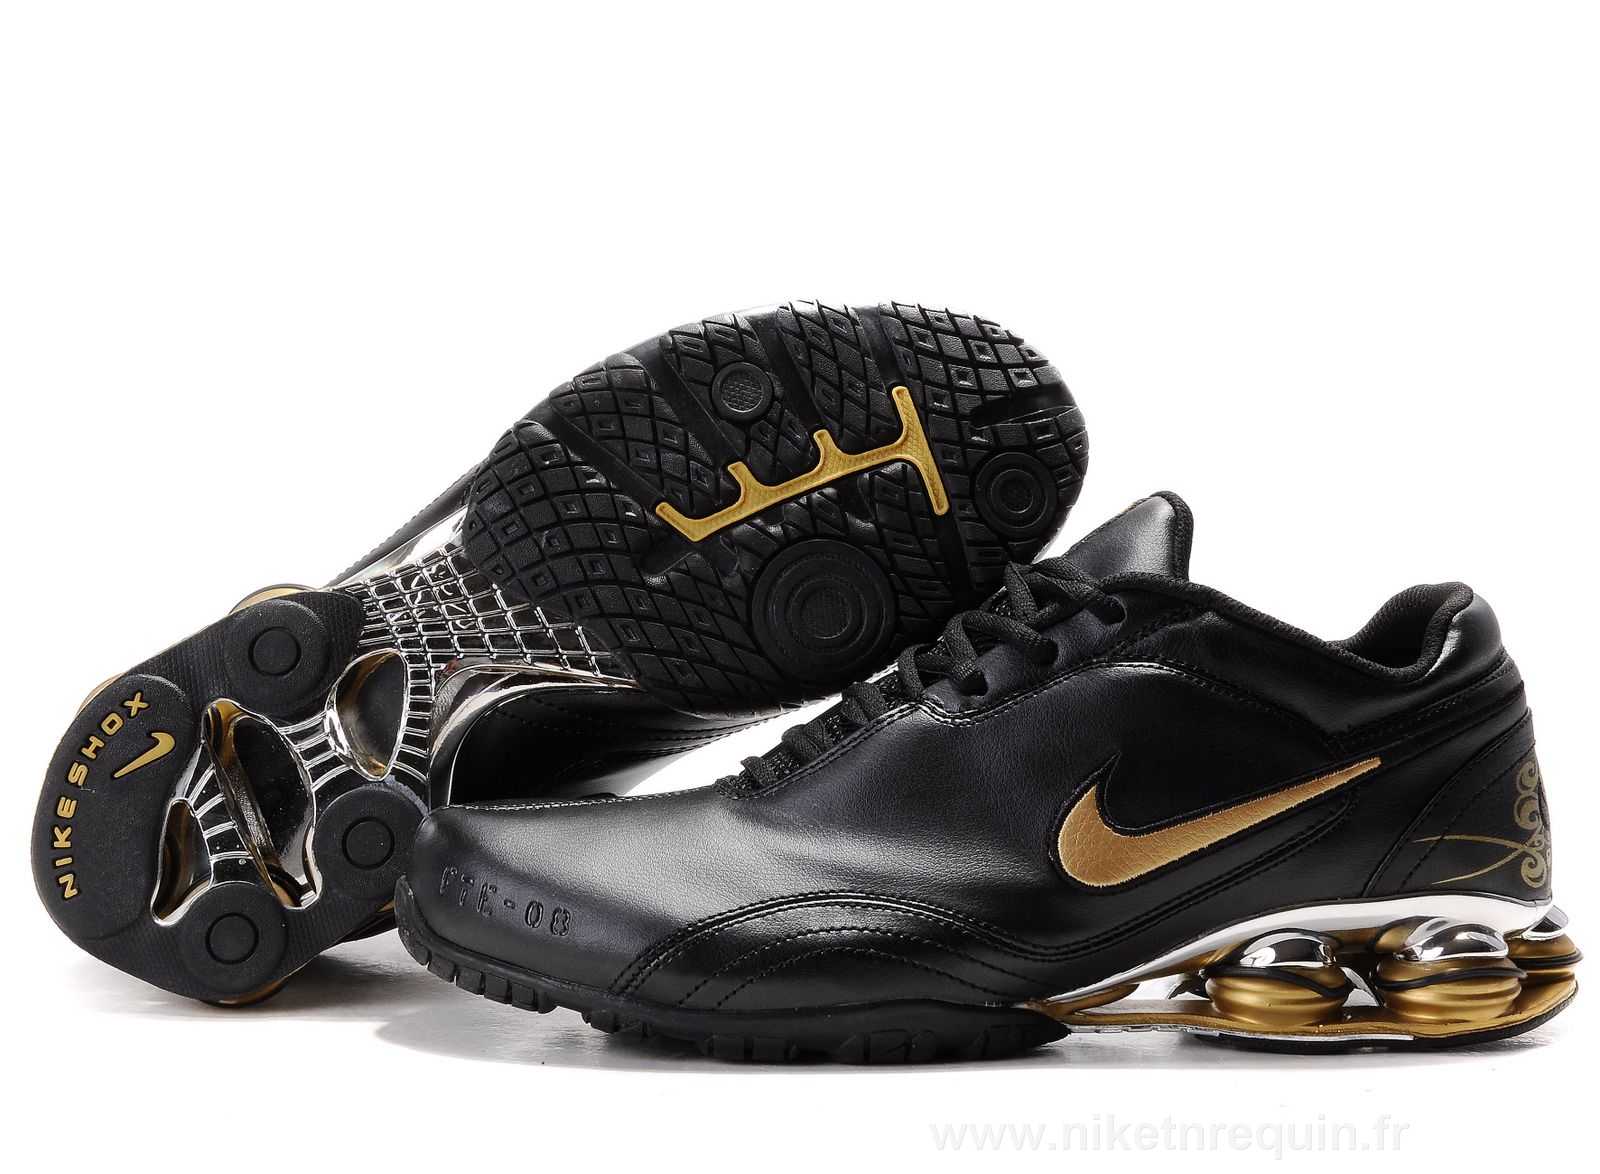 Noir Et Or Nike Shox R5 Chaussures Hommes